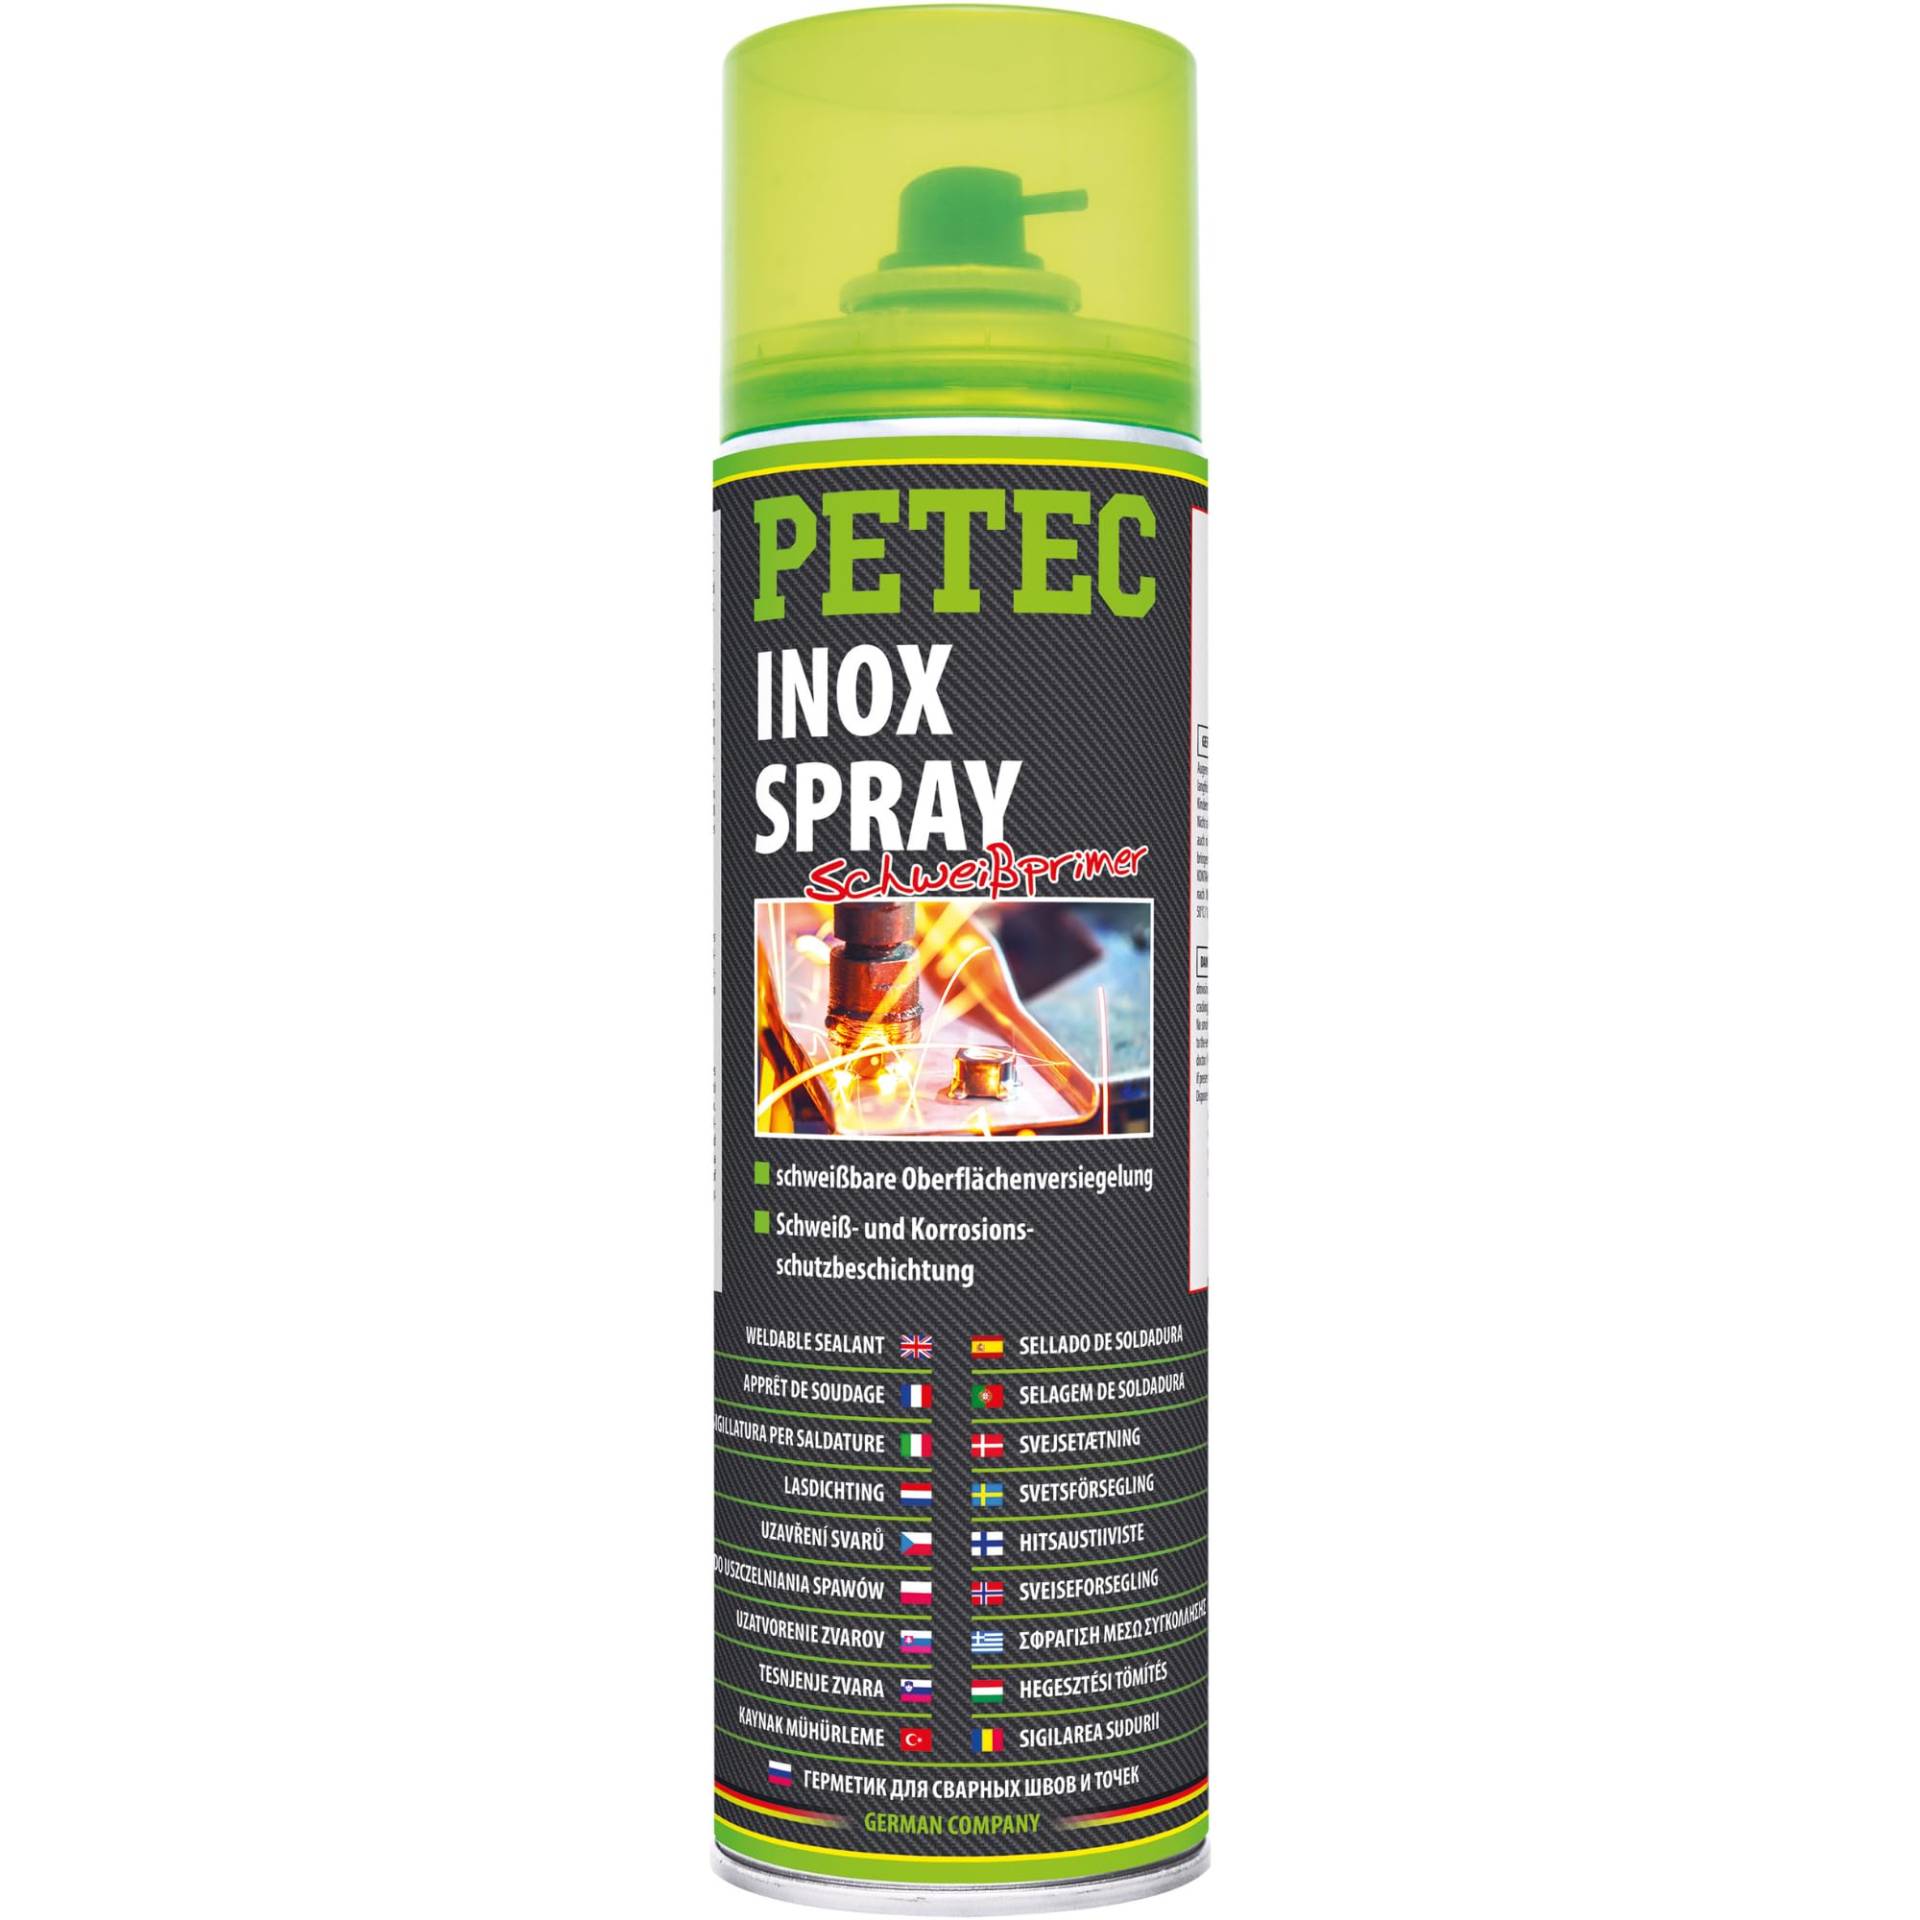 PETEC INOX Spray 500 ml - 70360 von PETEC